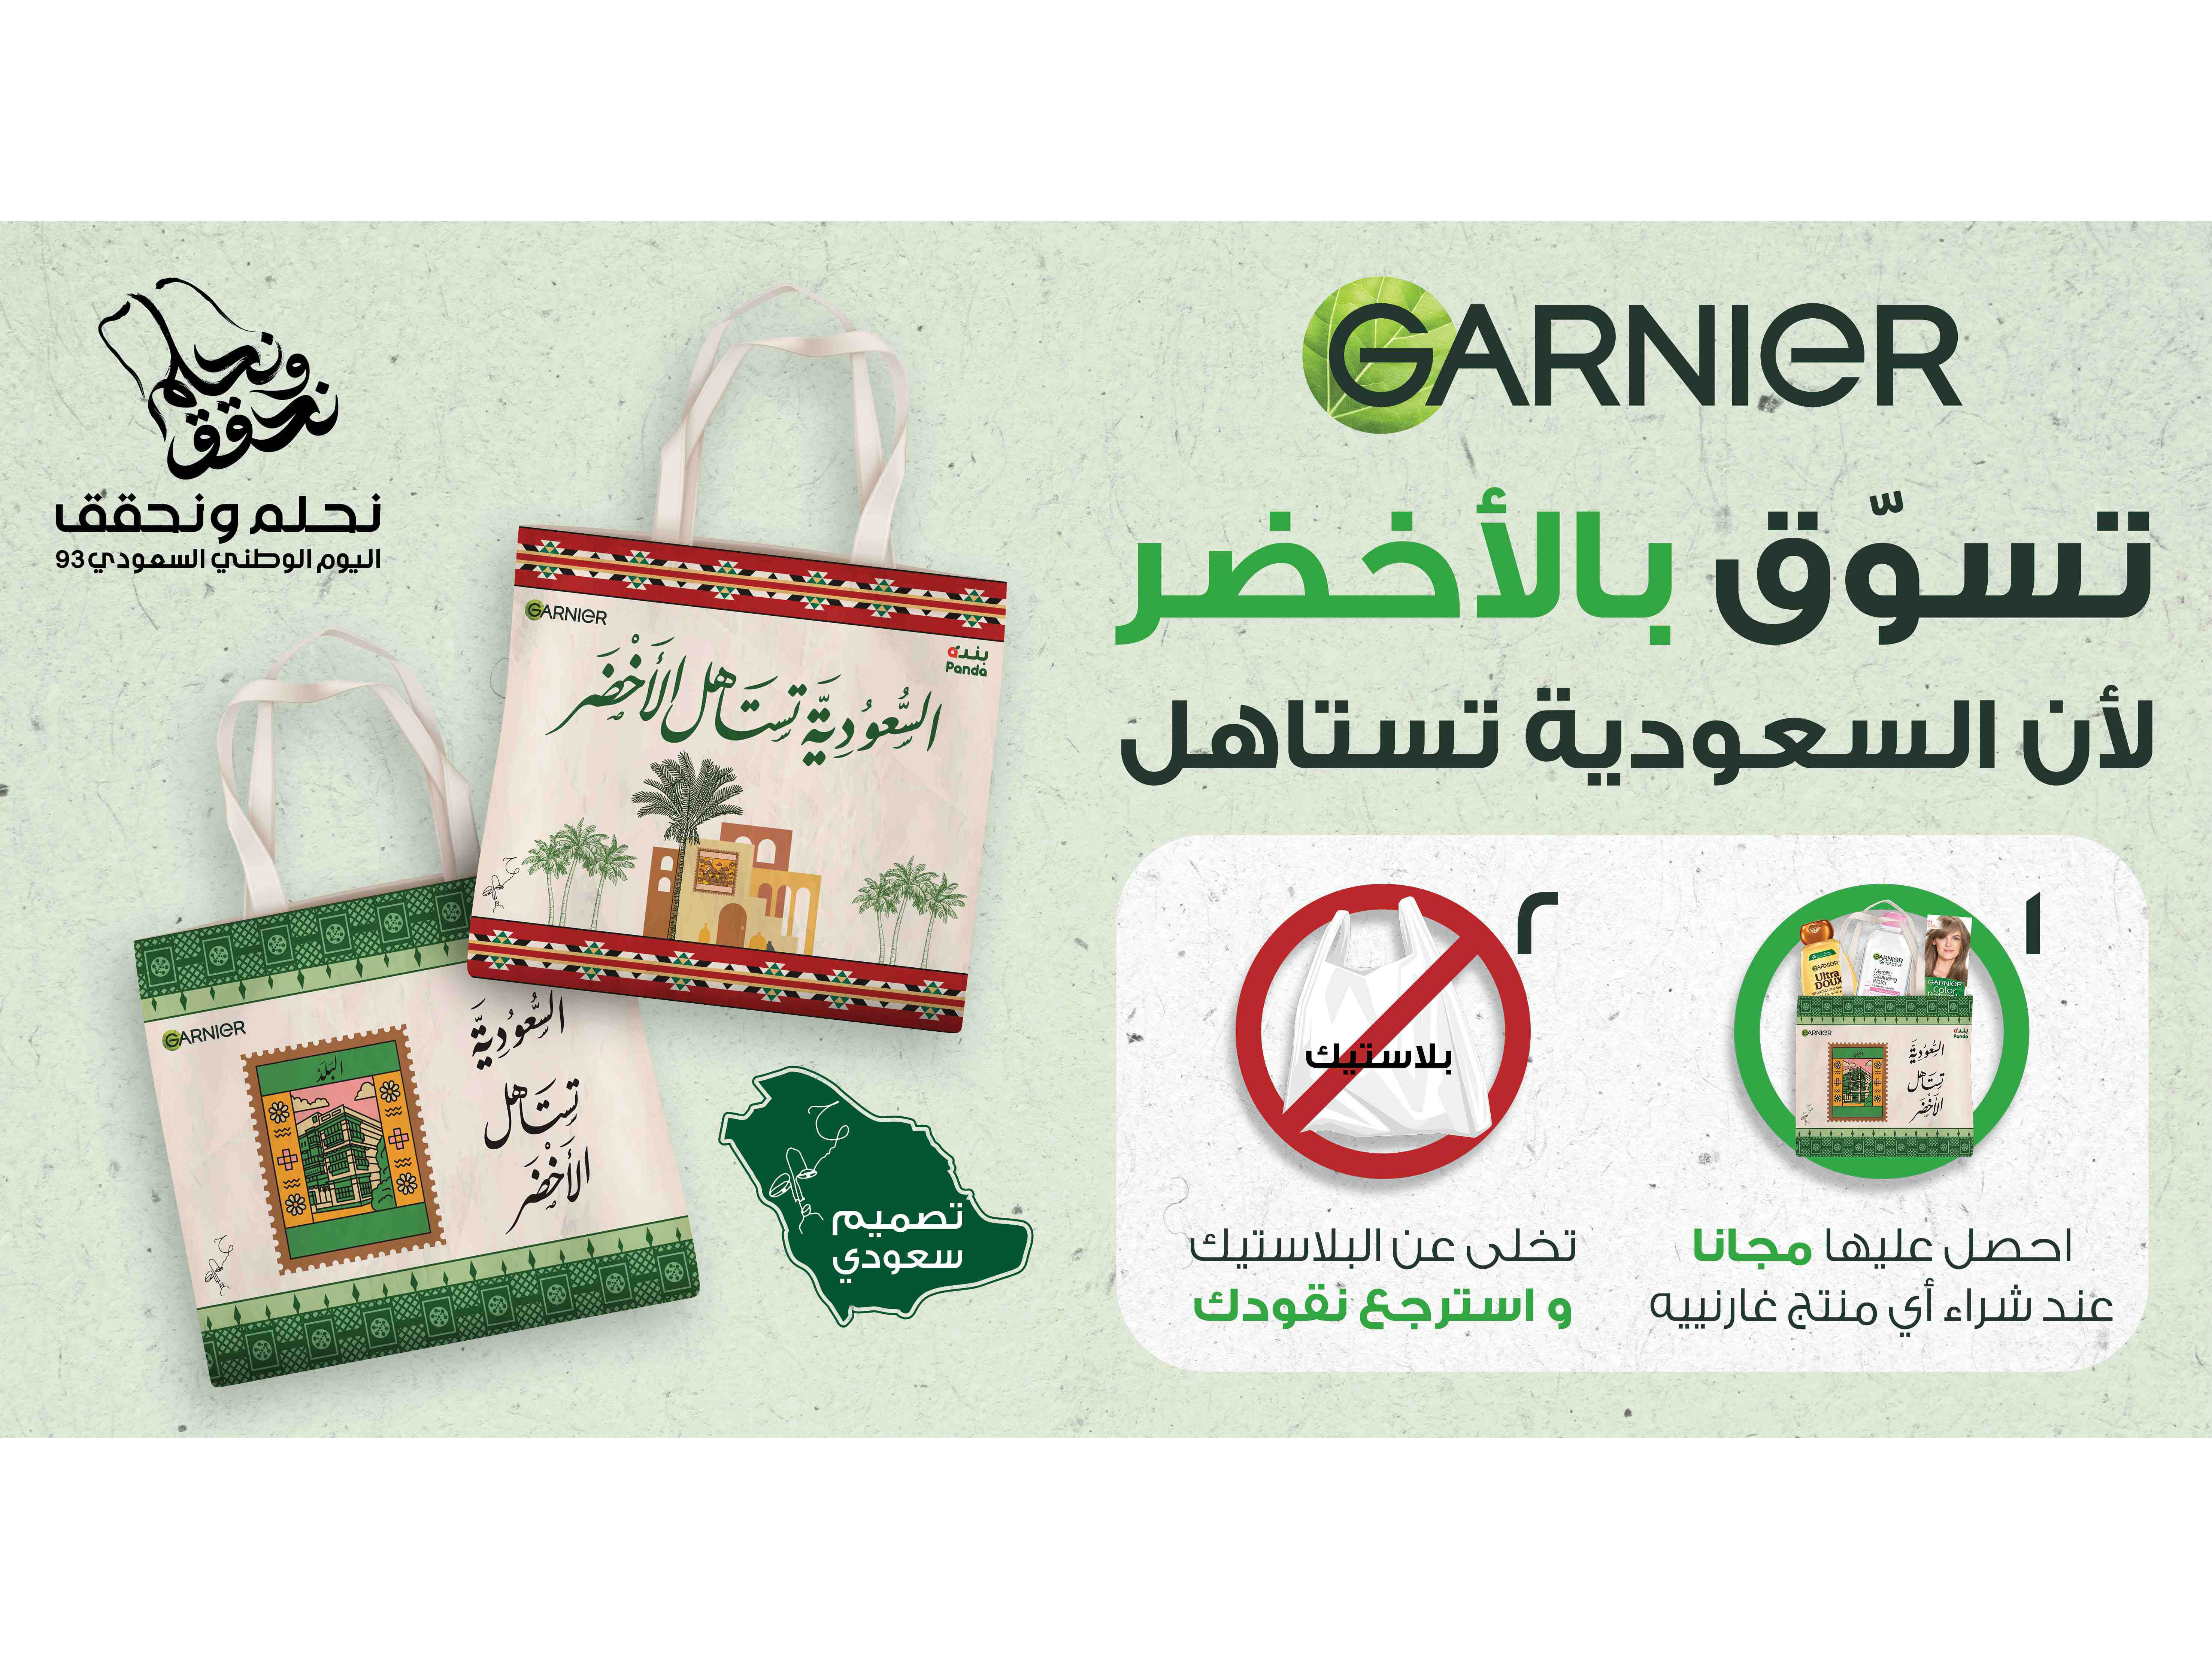 Saudi Arabia snapchatters invited to design the next Garnier green tote bag